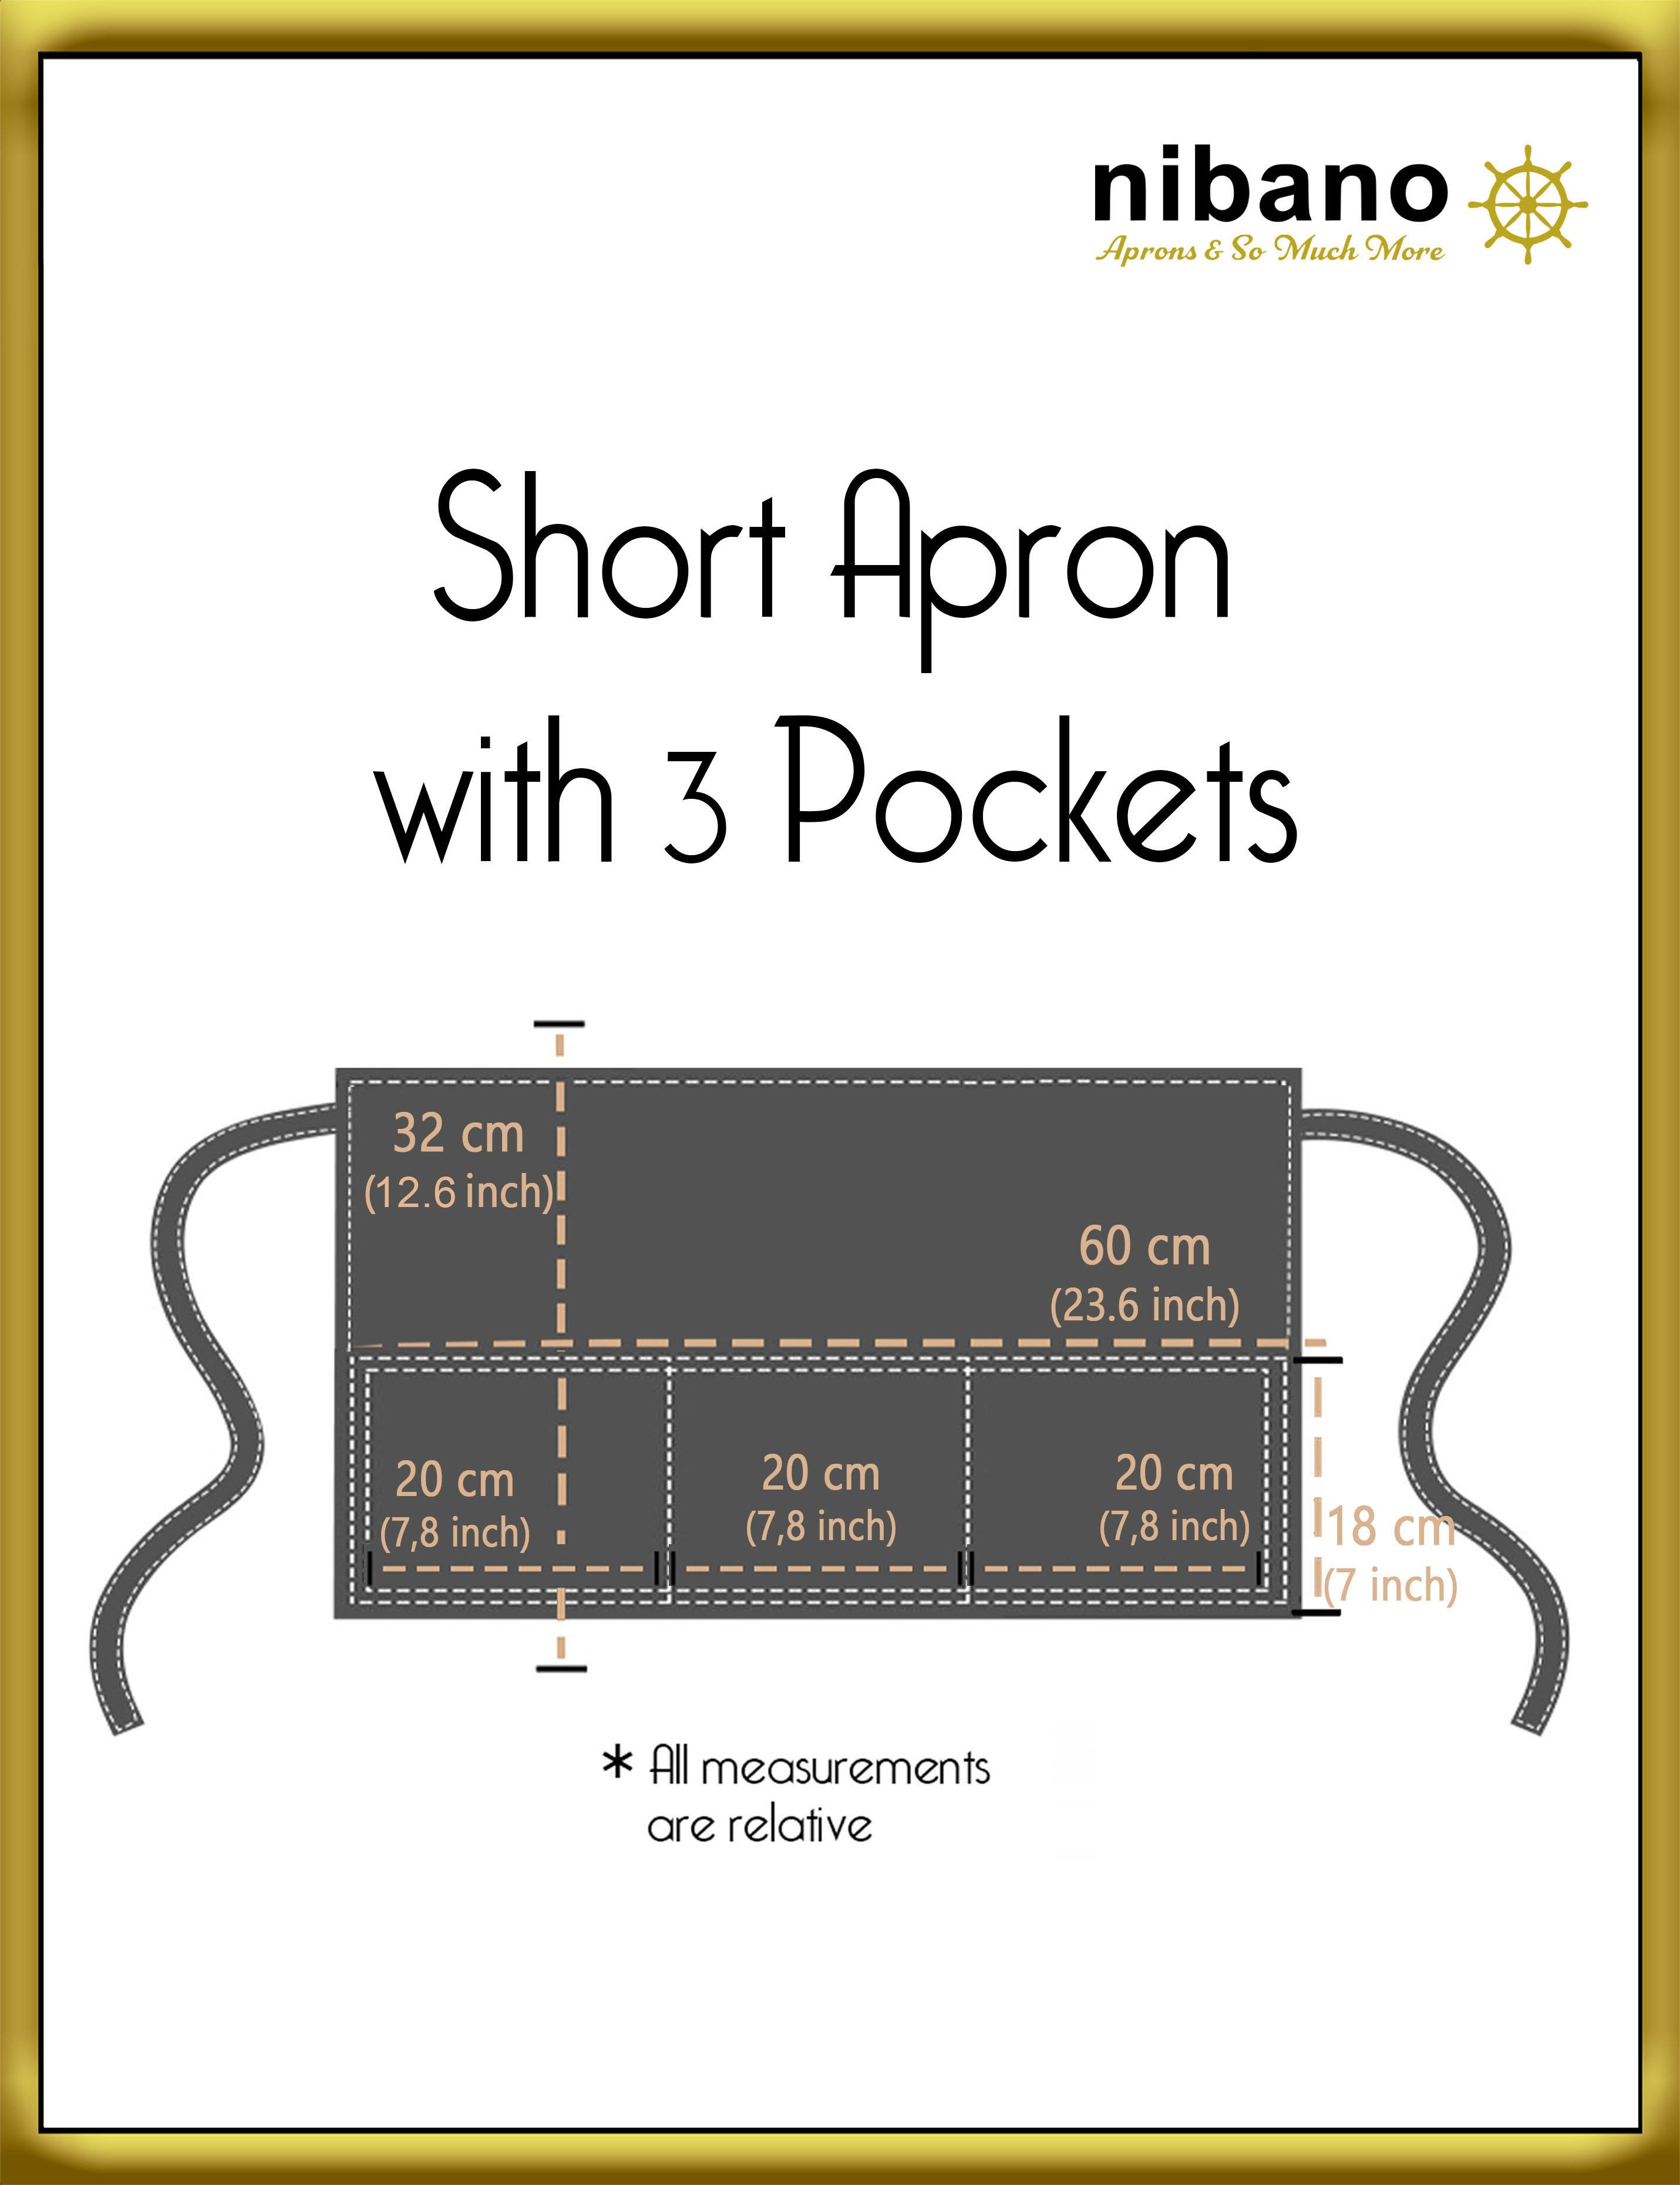 Personalised short bar apron dimensions